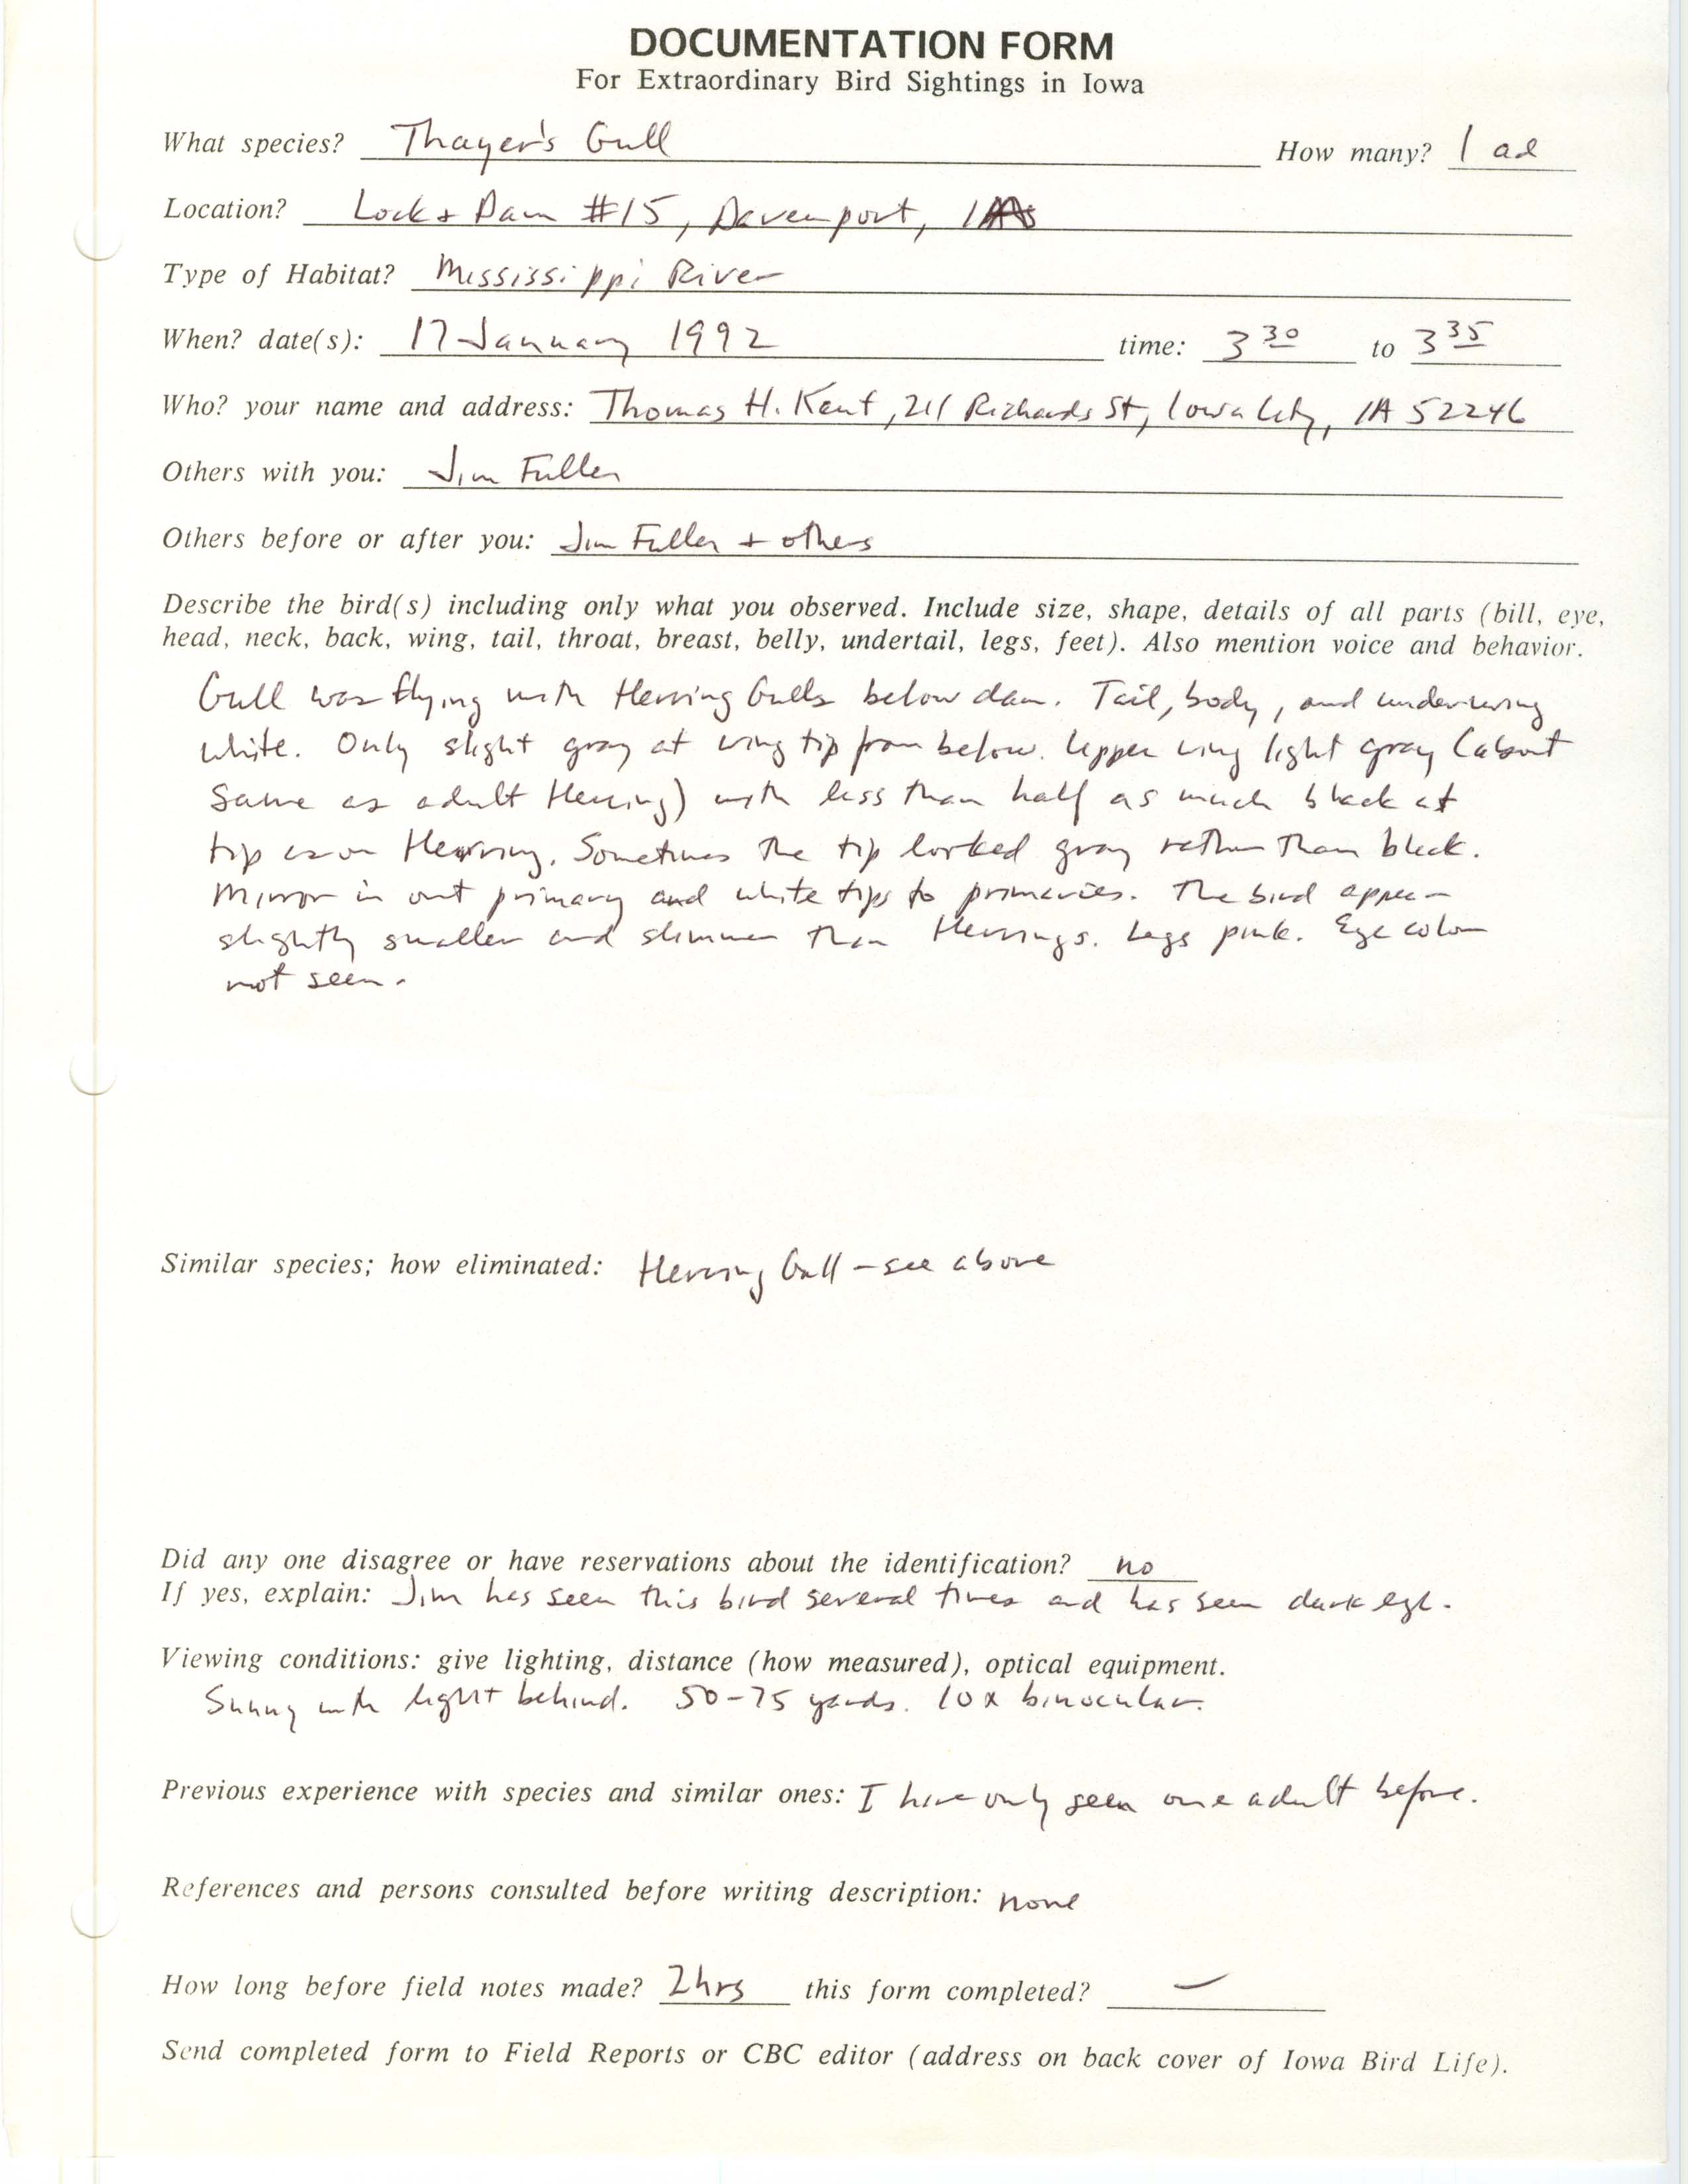 Rare bird documentation form for Thayer's Gull at Lock + Dam 15, 1992